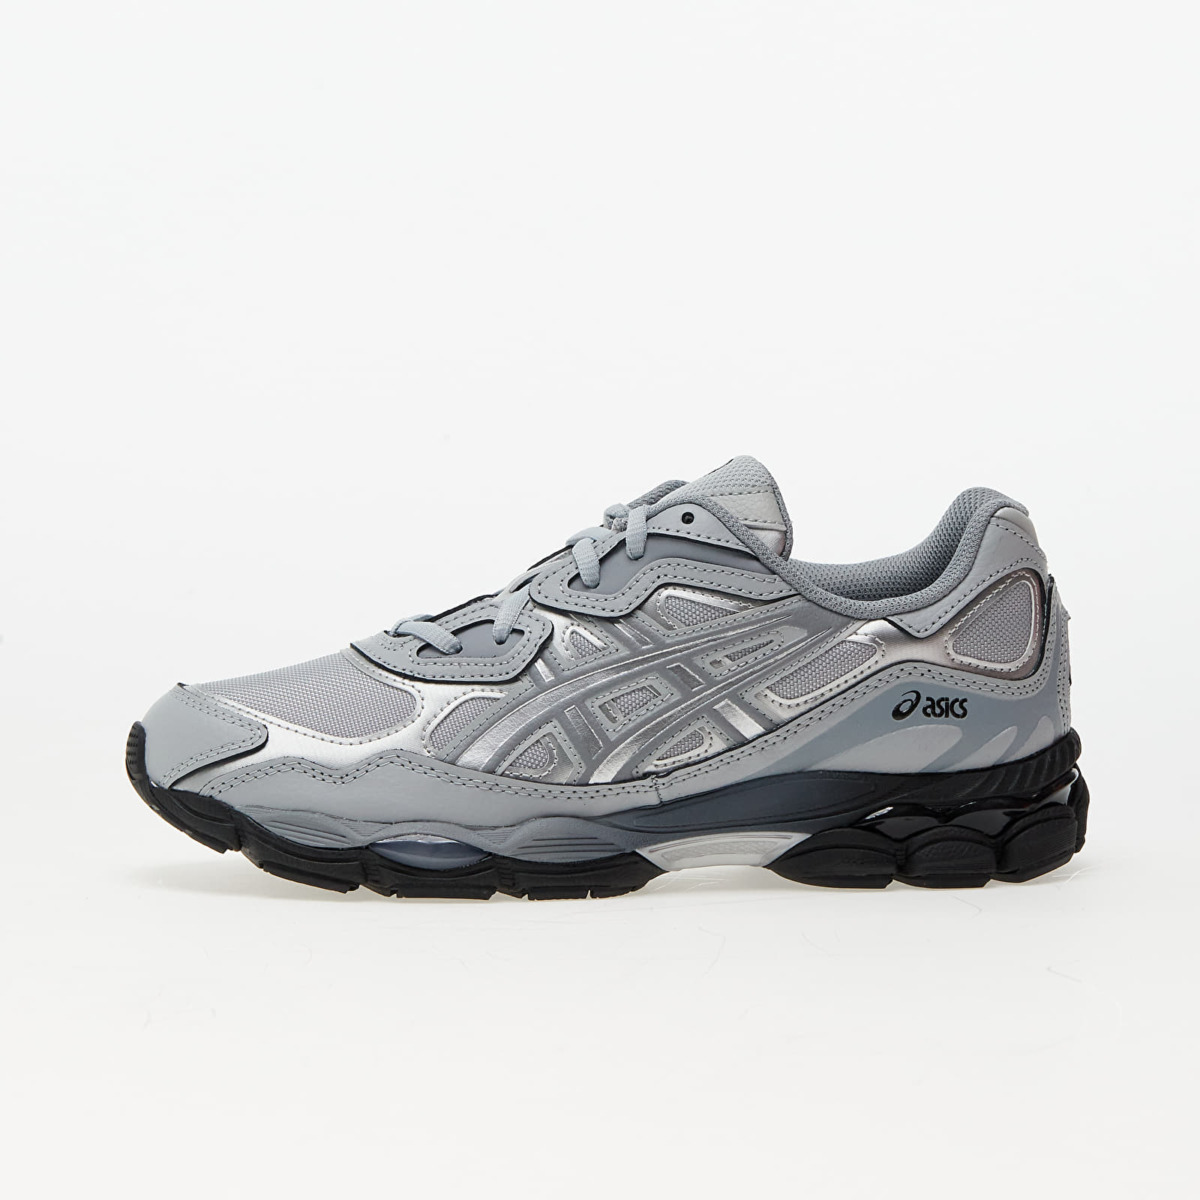 Footshop Gent Gel Running Shoes in Grey from Asics GOOFASH